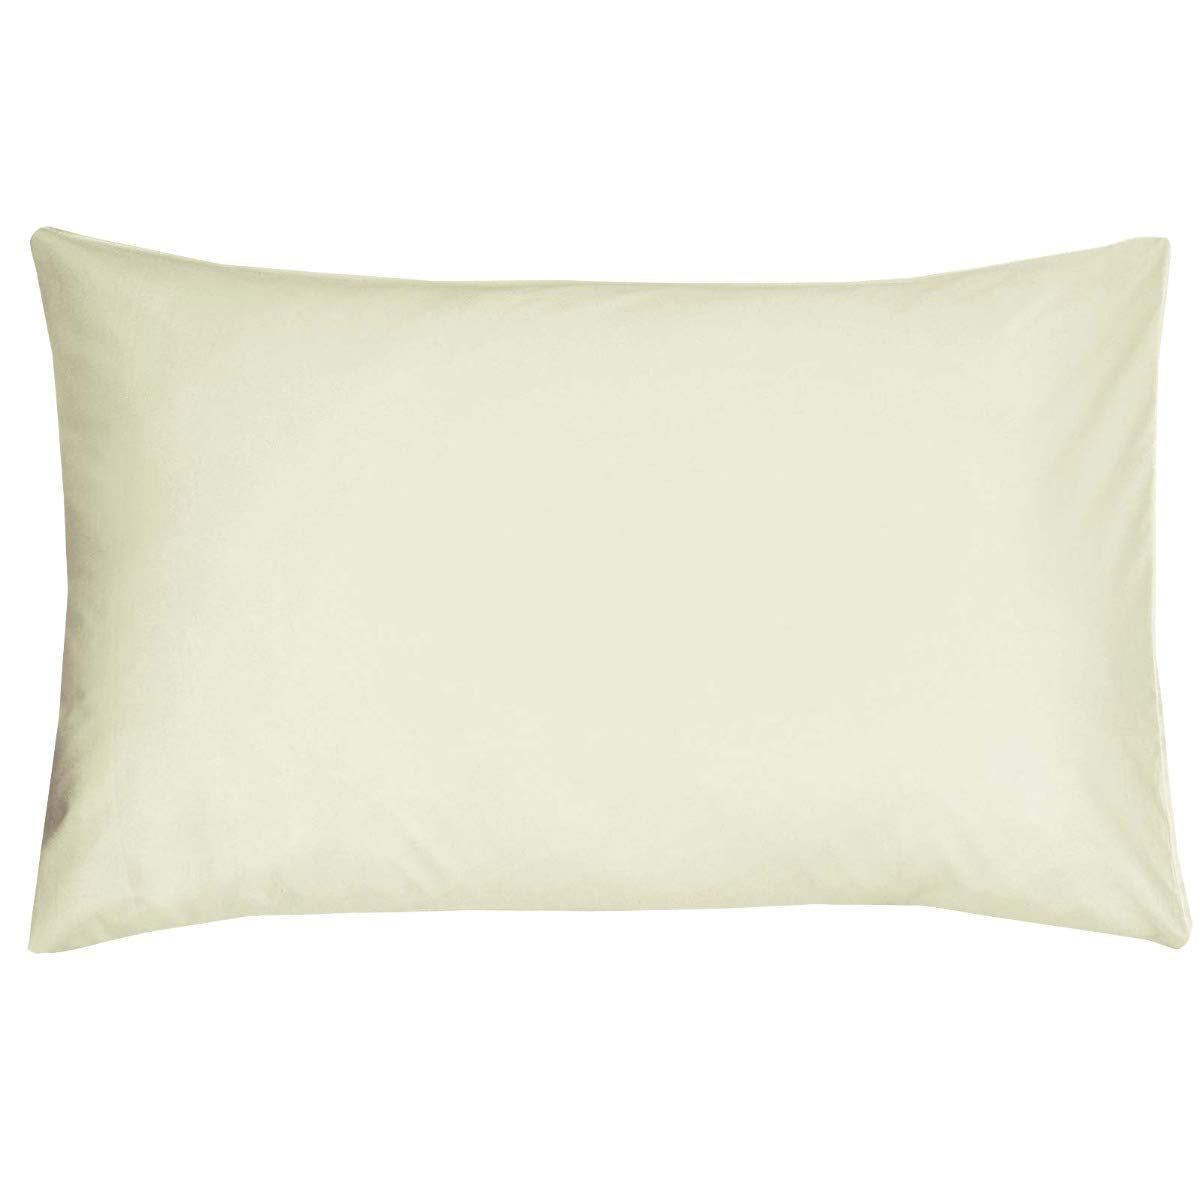 Easy Care - Pillowcase Pairs